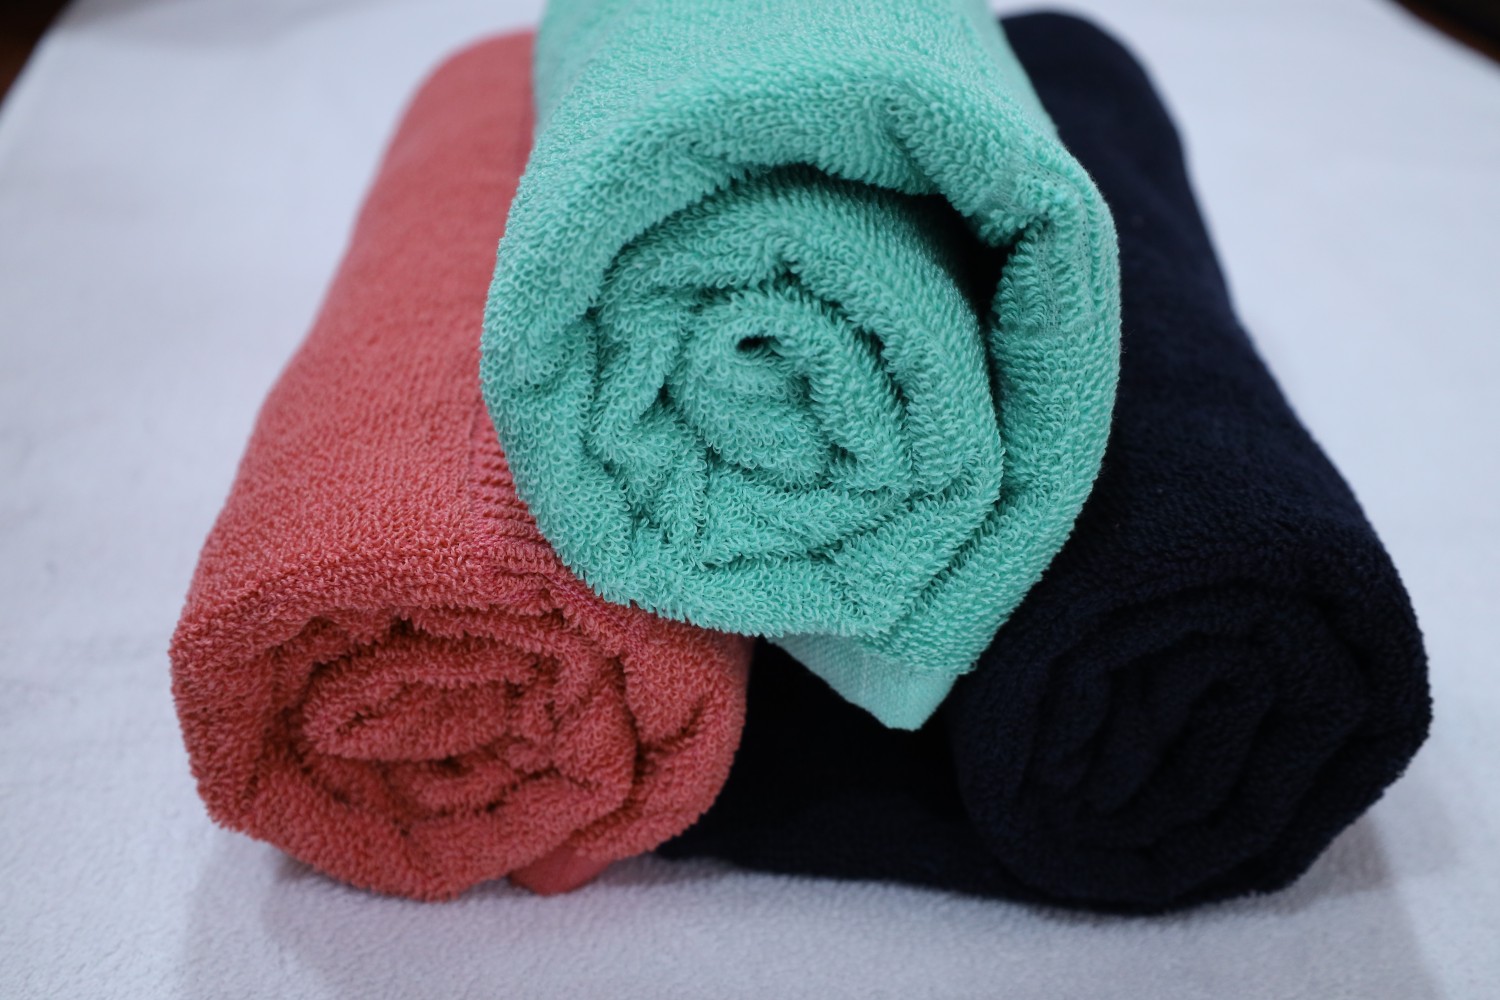 Taurusent Super Soft 100% Cotton High Absorbing Turkey Bath Towel, Size: 30x60 inches (450 GSM) - Pack of 3 (Darkblue-Peach-Aqua)